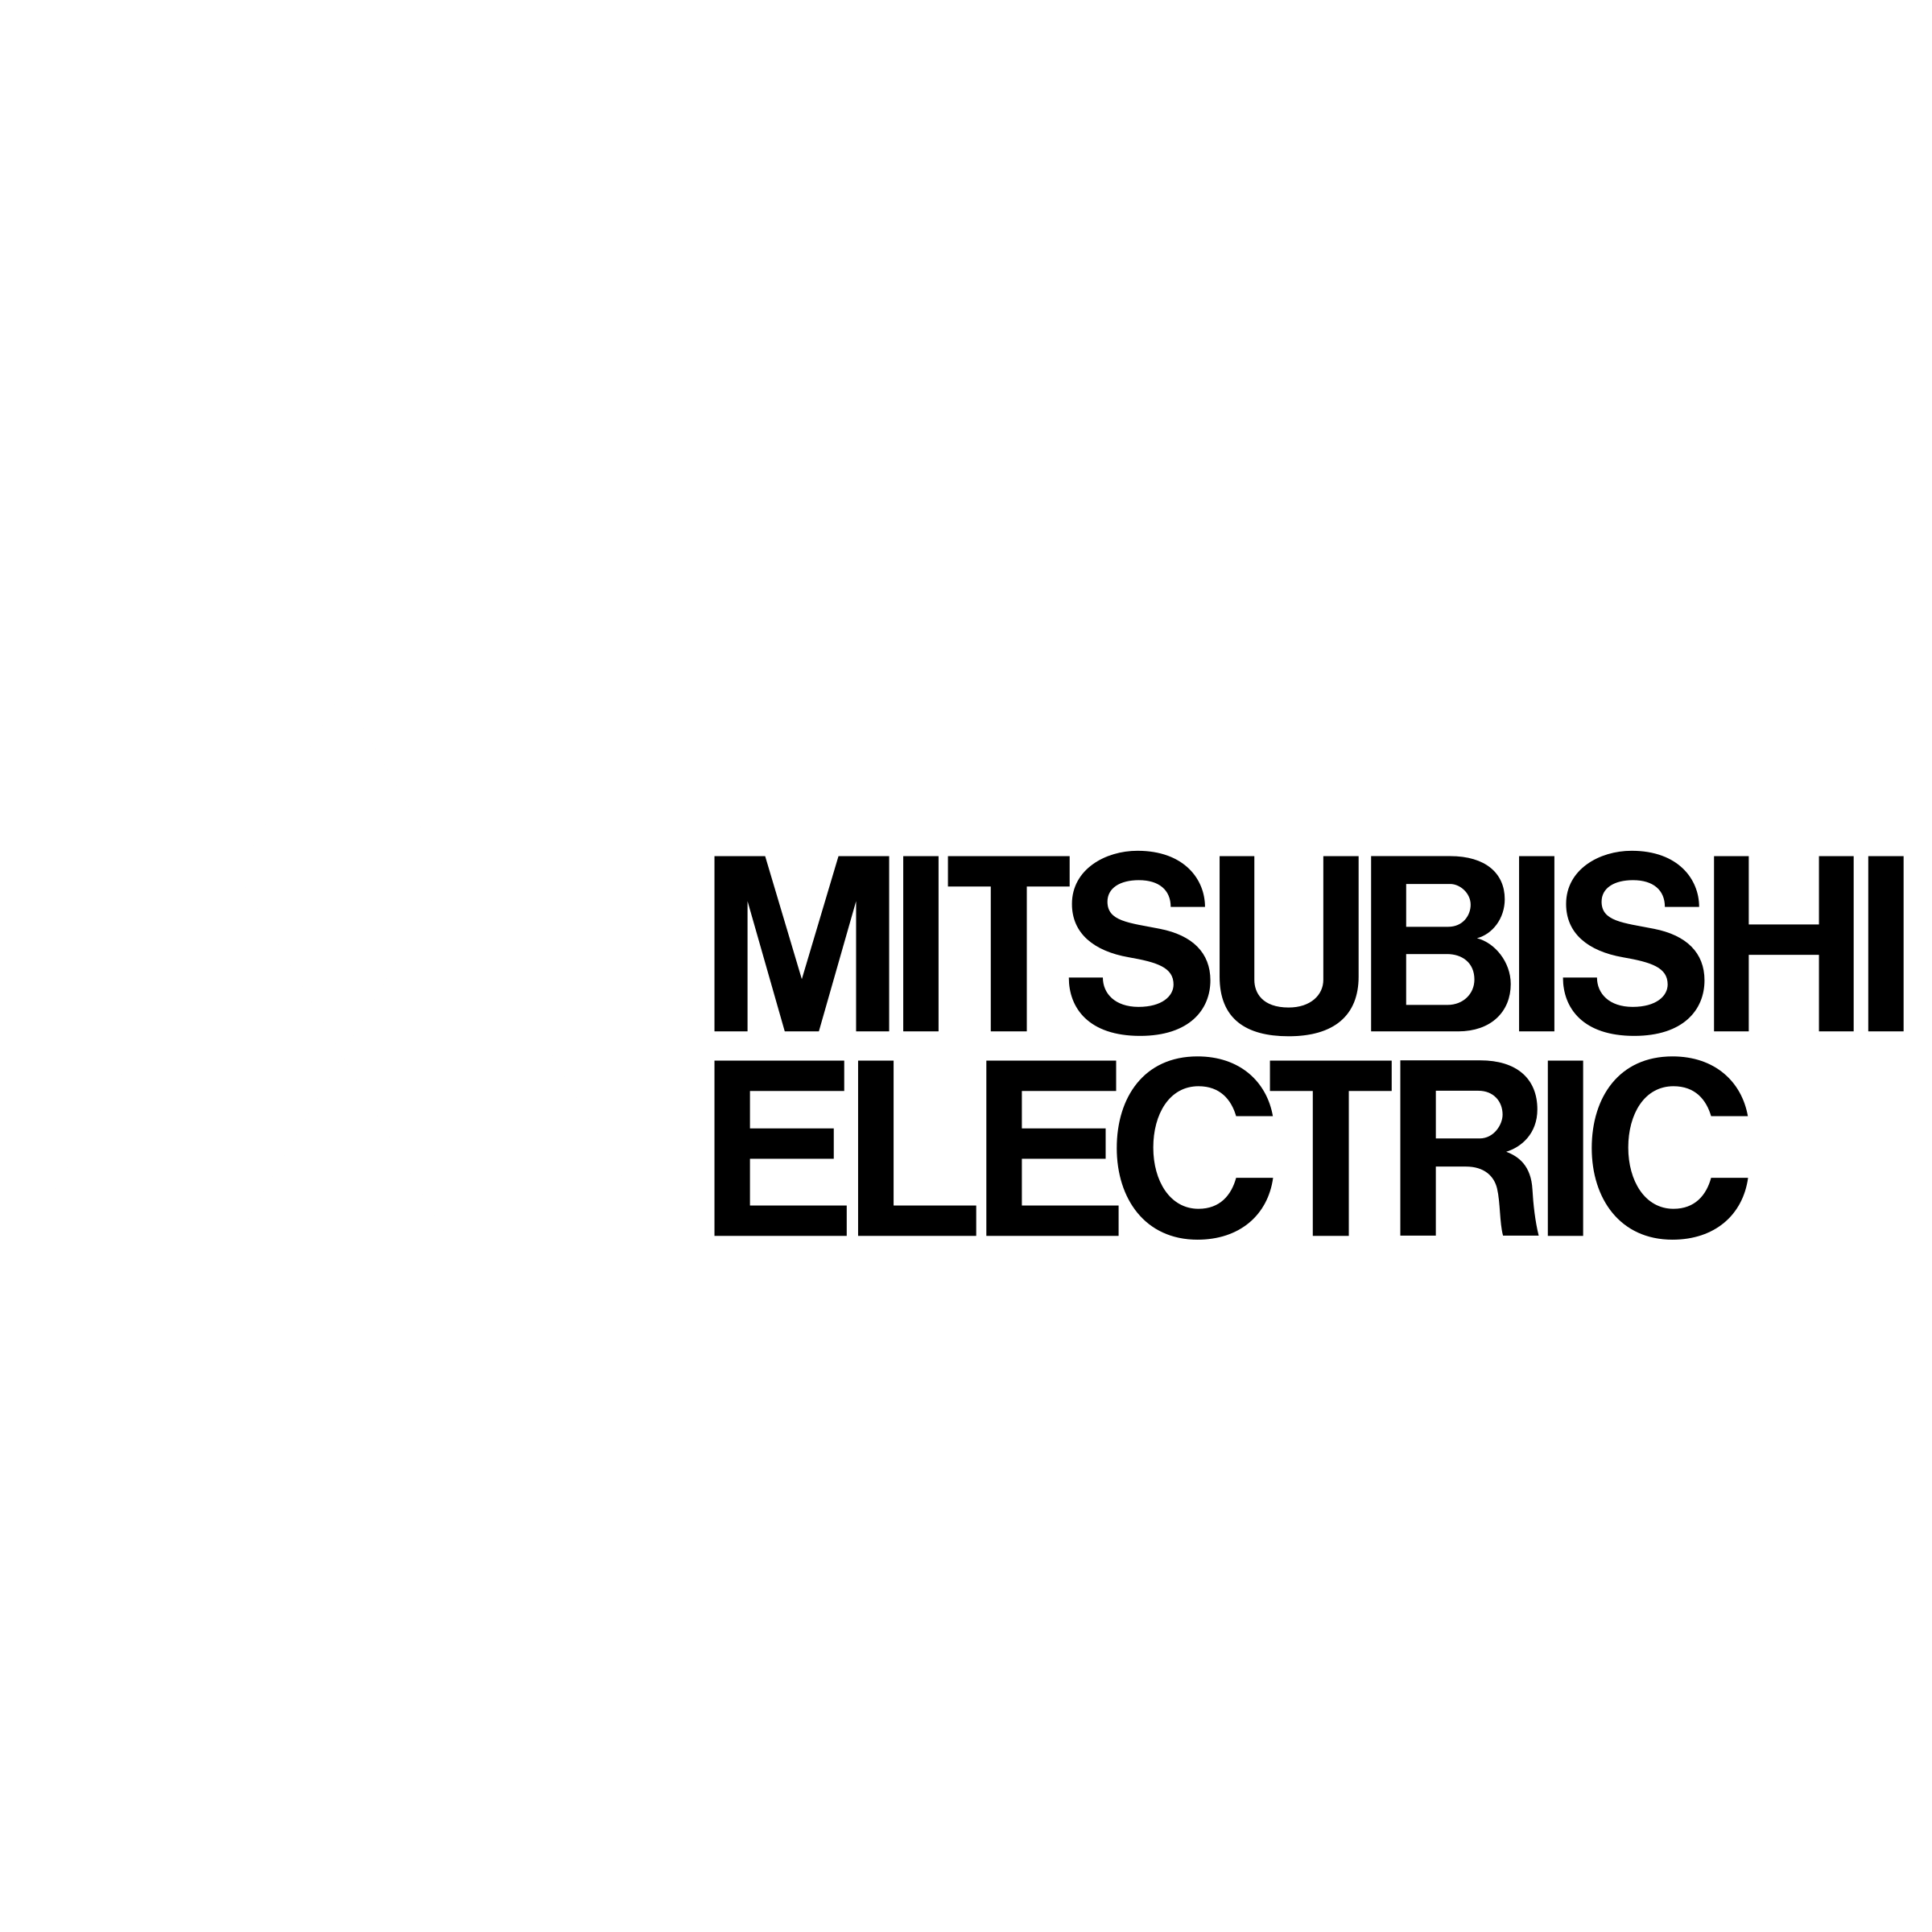 Mitsubishi Electric Logo - Mitsubishi Electric Logo PNG Transparent & SVG Vector